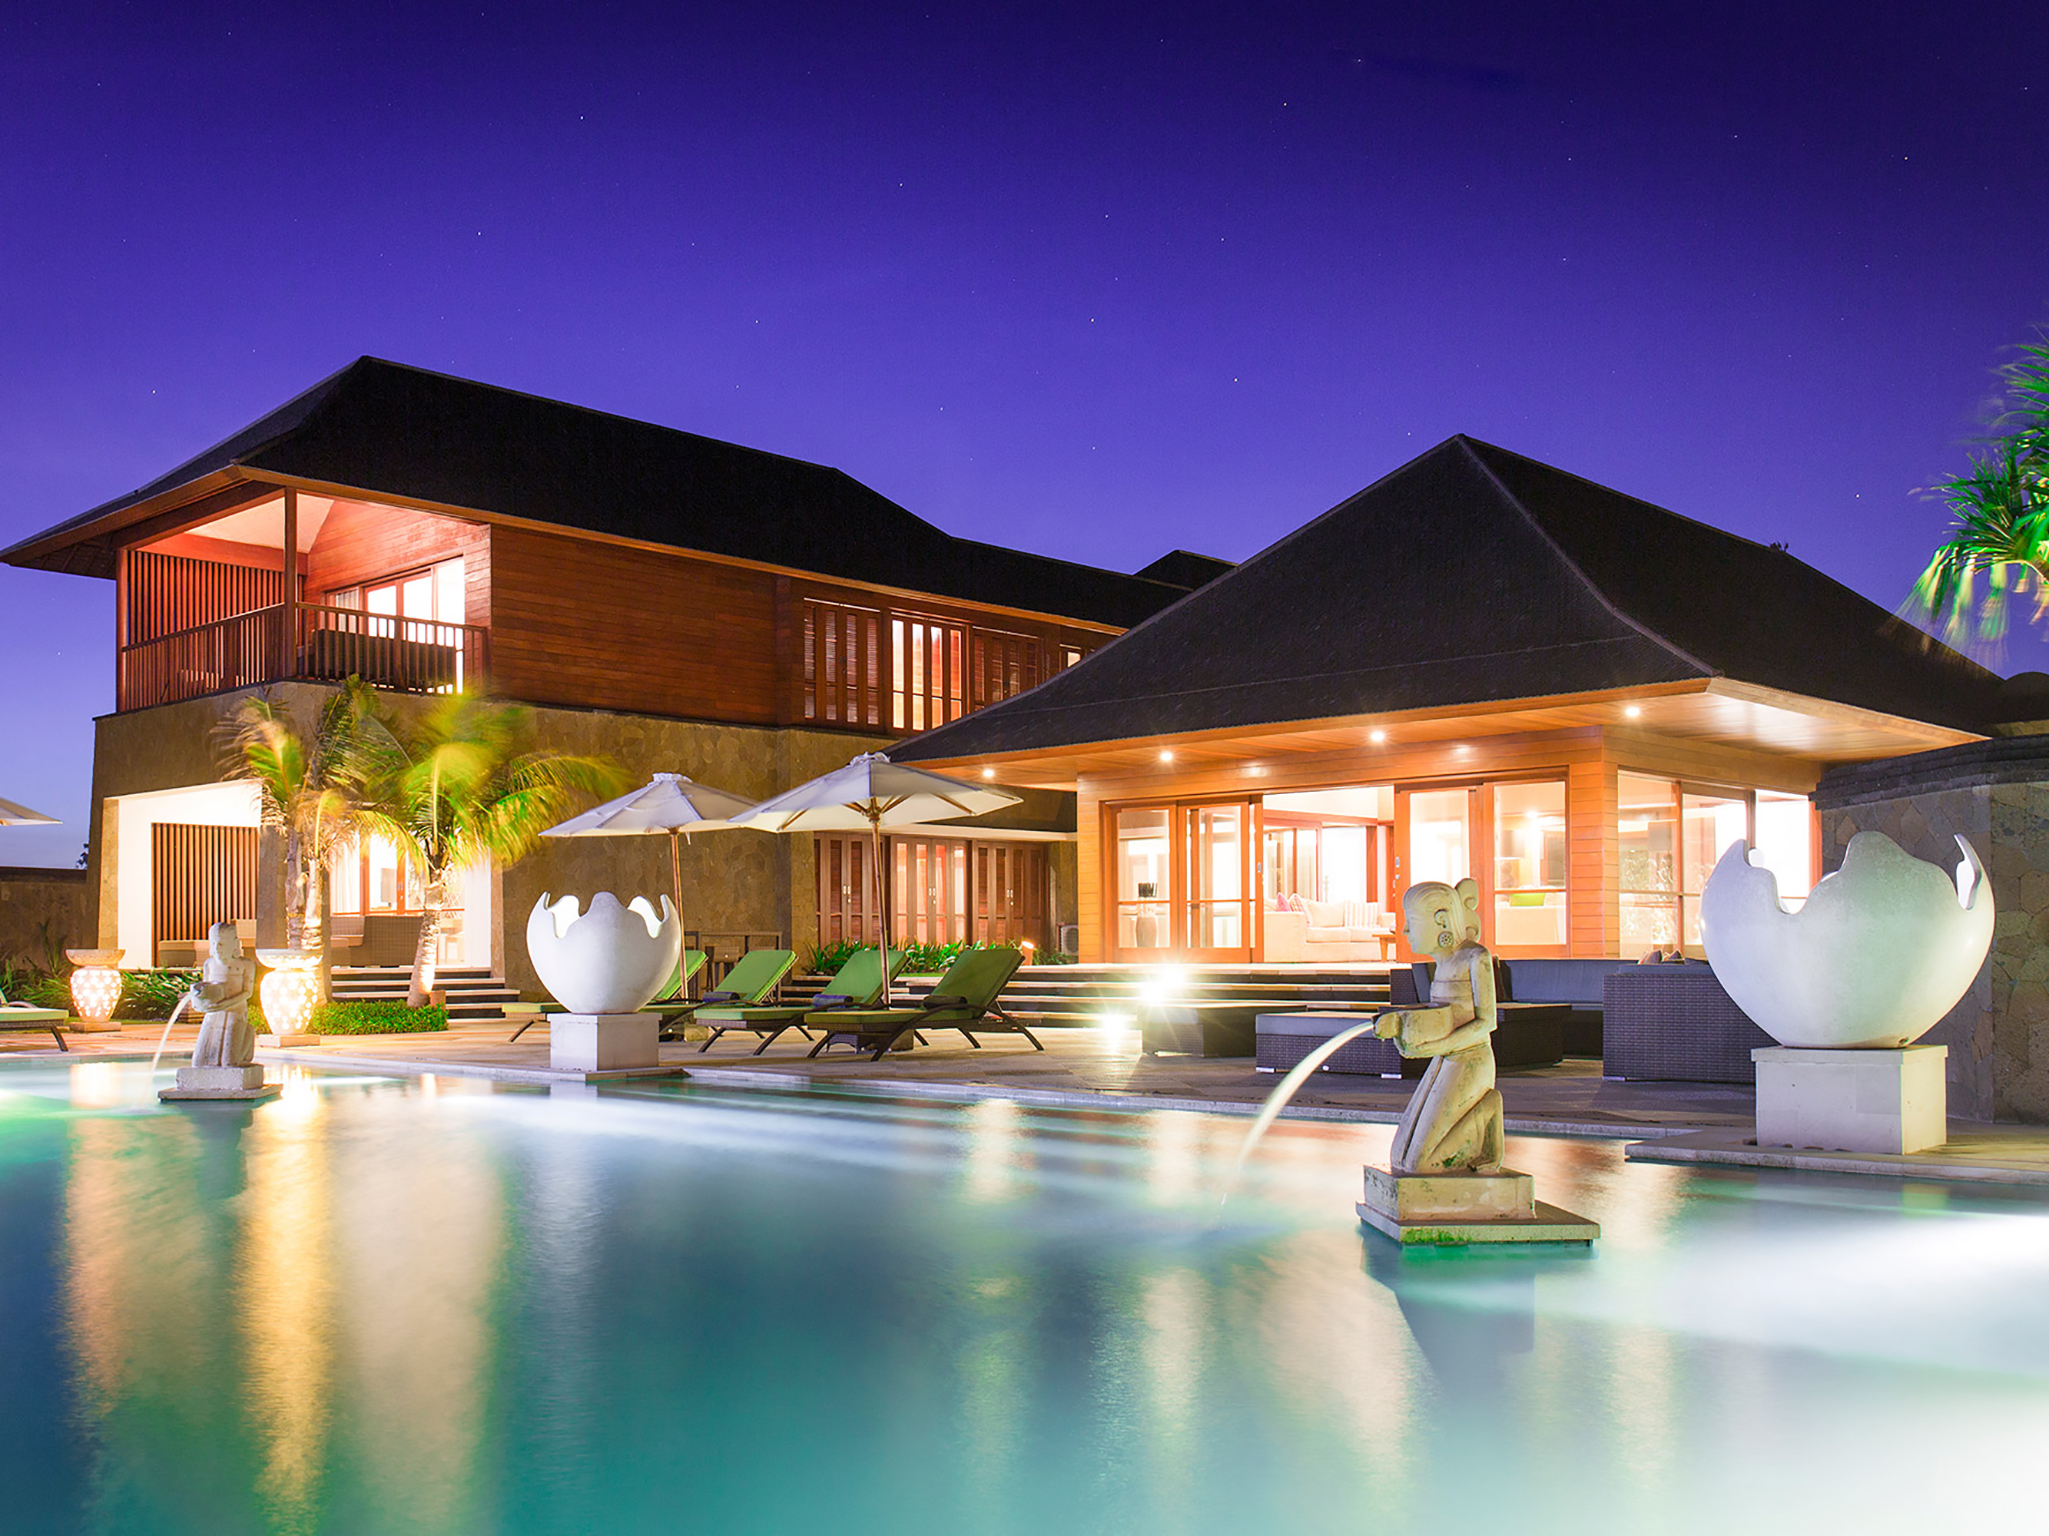 Villa Bayu Gita - Beachfront - Pool and villa at night - Bayu Gita Beach Front, Ketewel, Bali